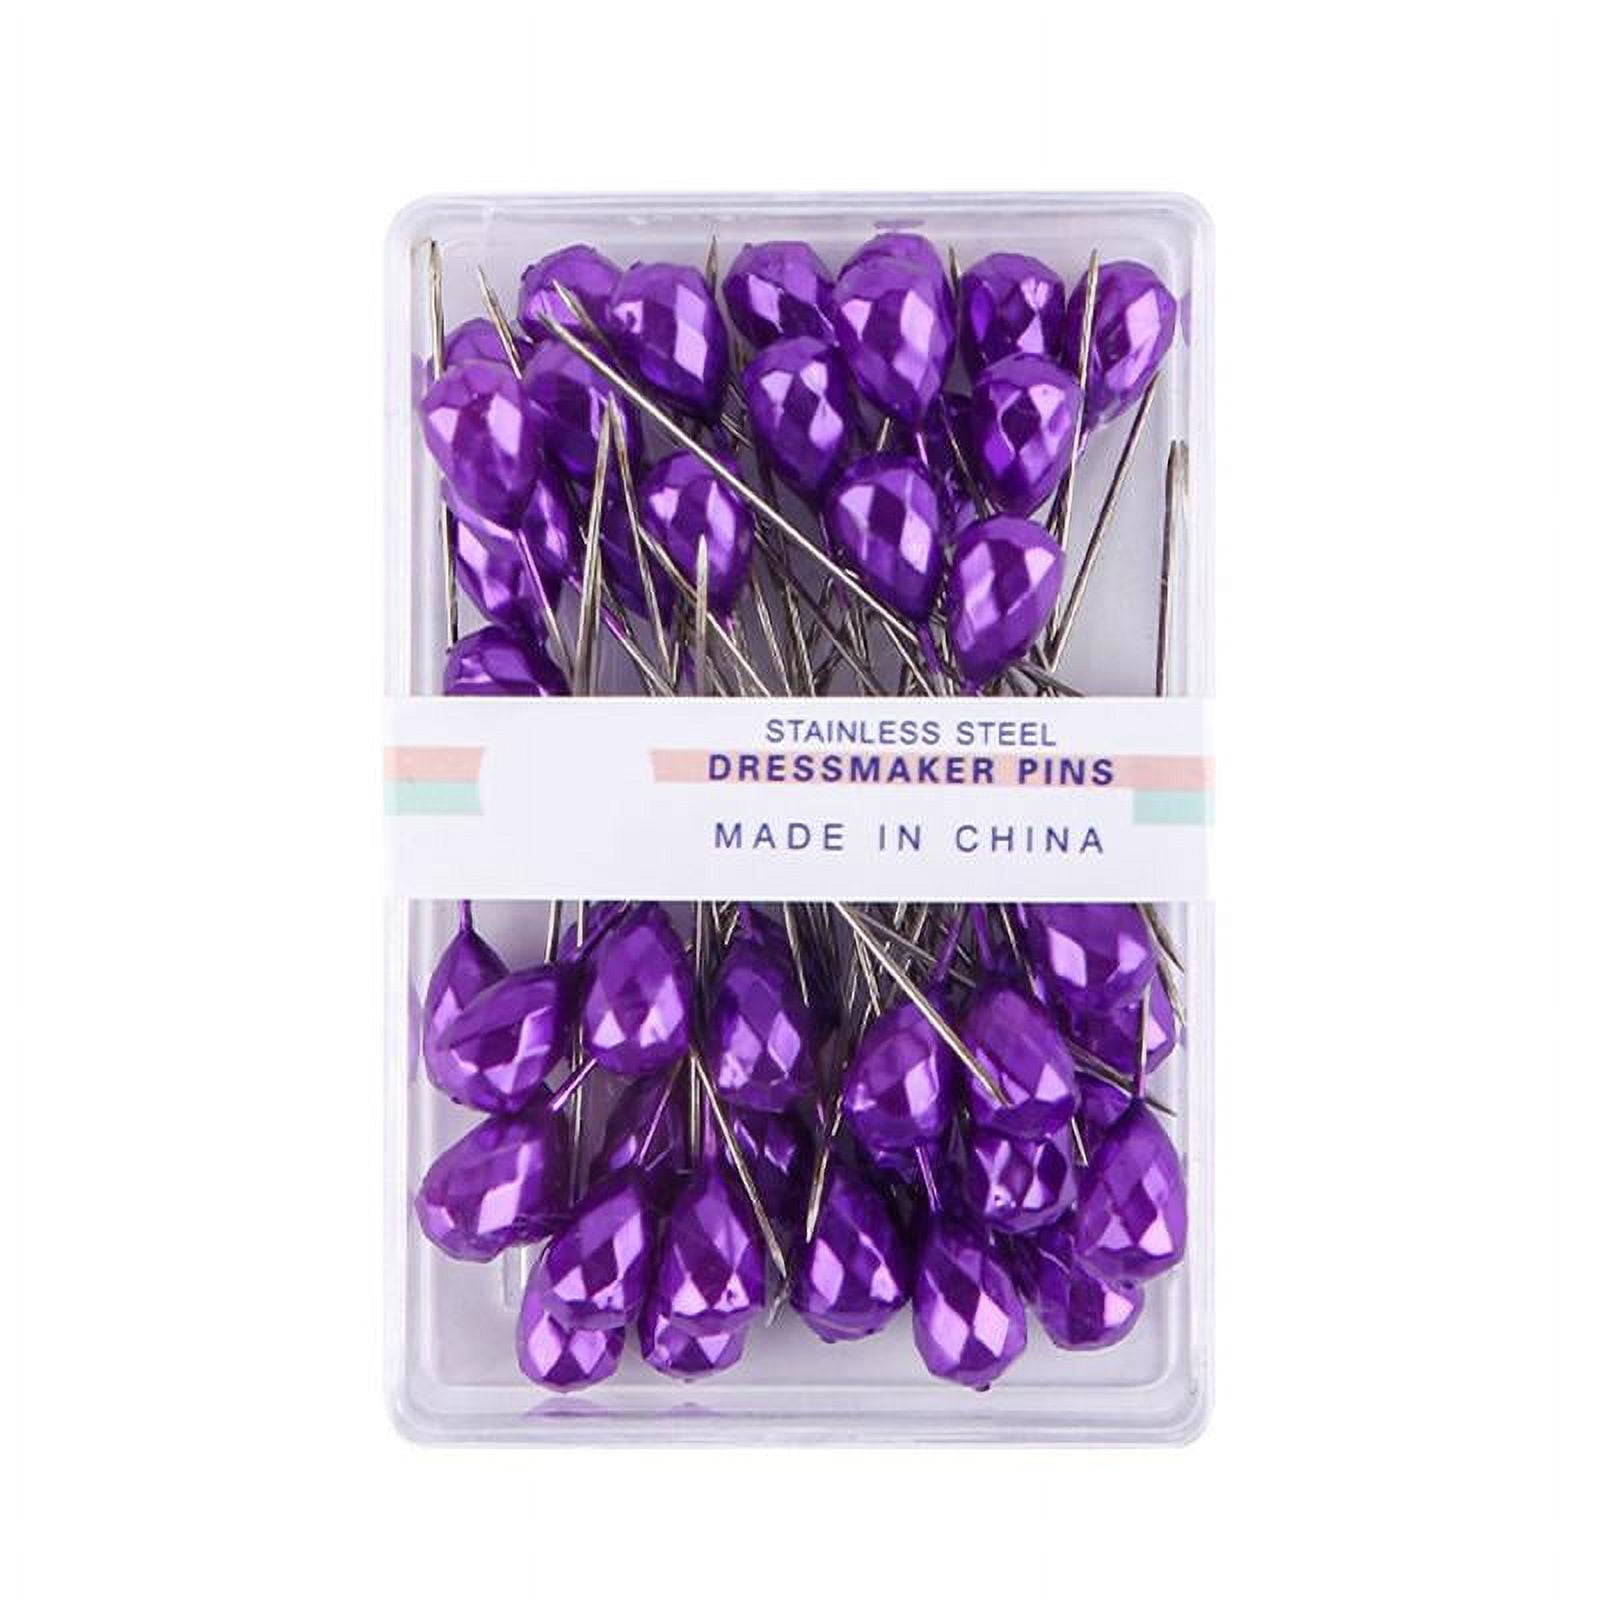 Dressmaker pins close up stock photo. Image of purple - 108257562